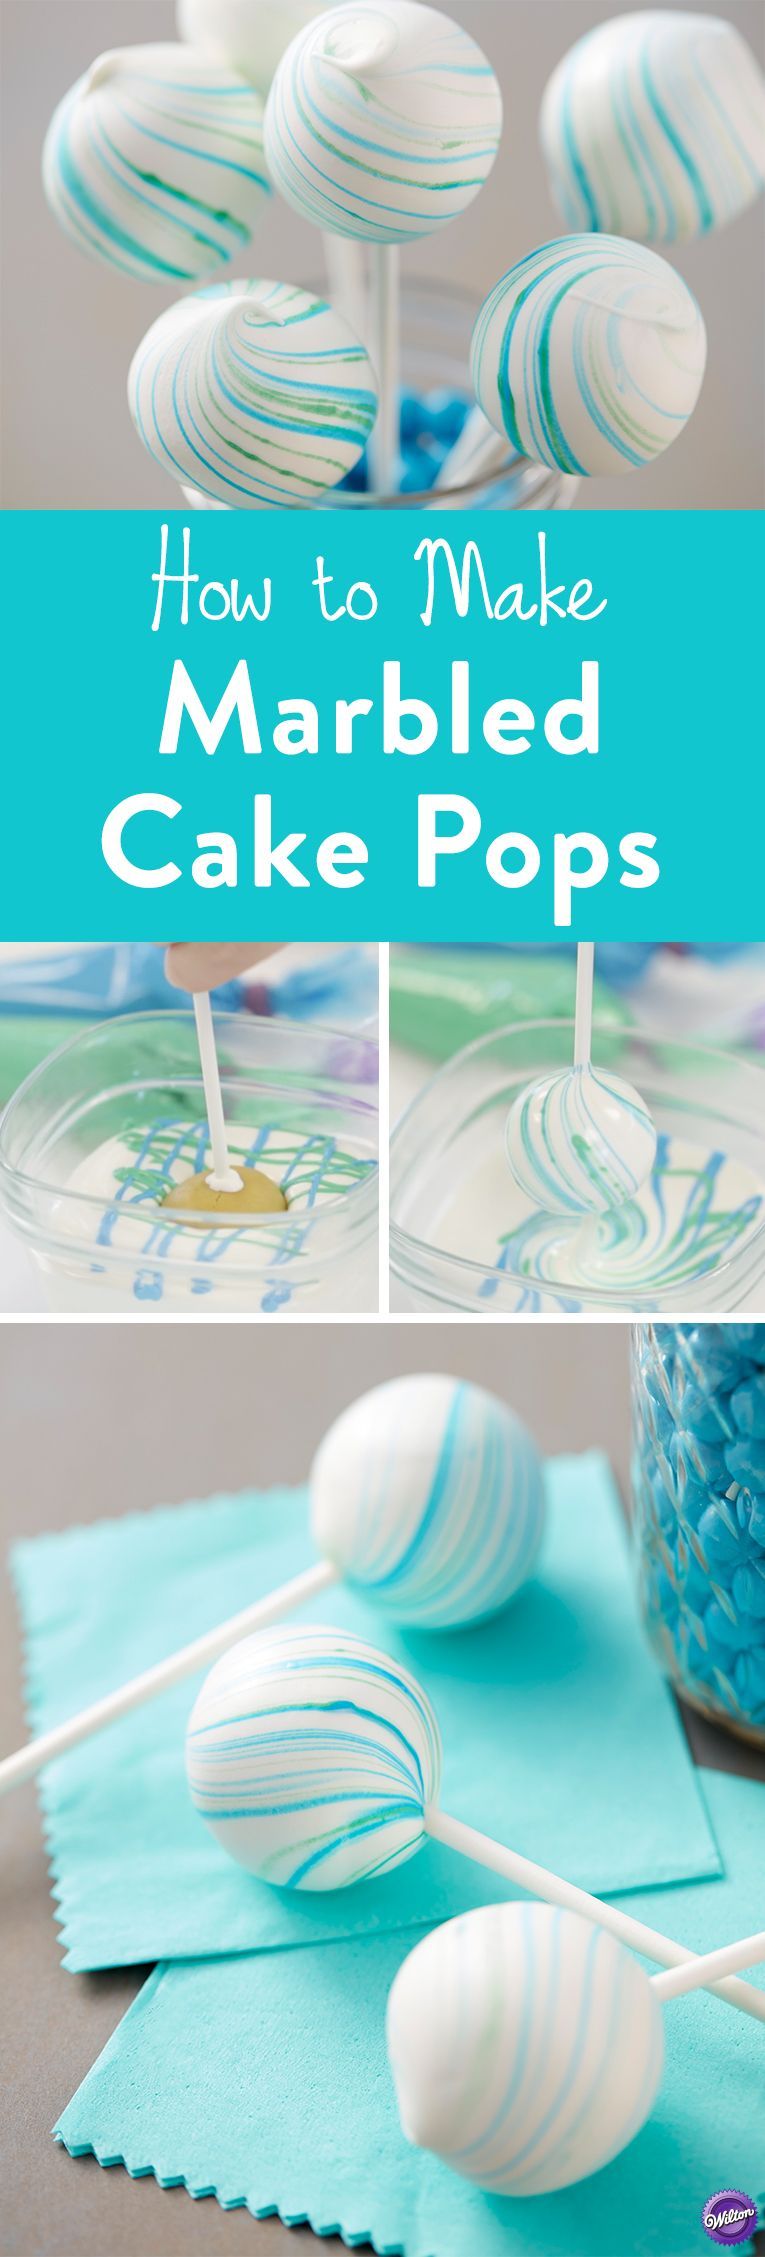 14 marble cake Pops ideas